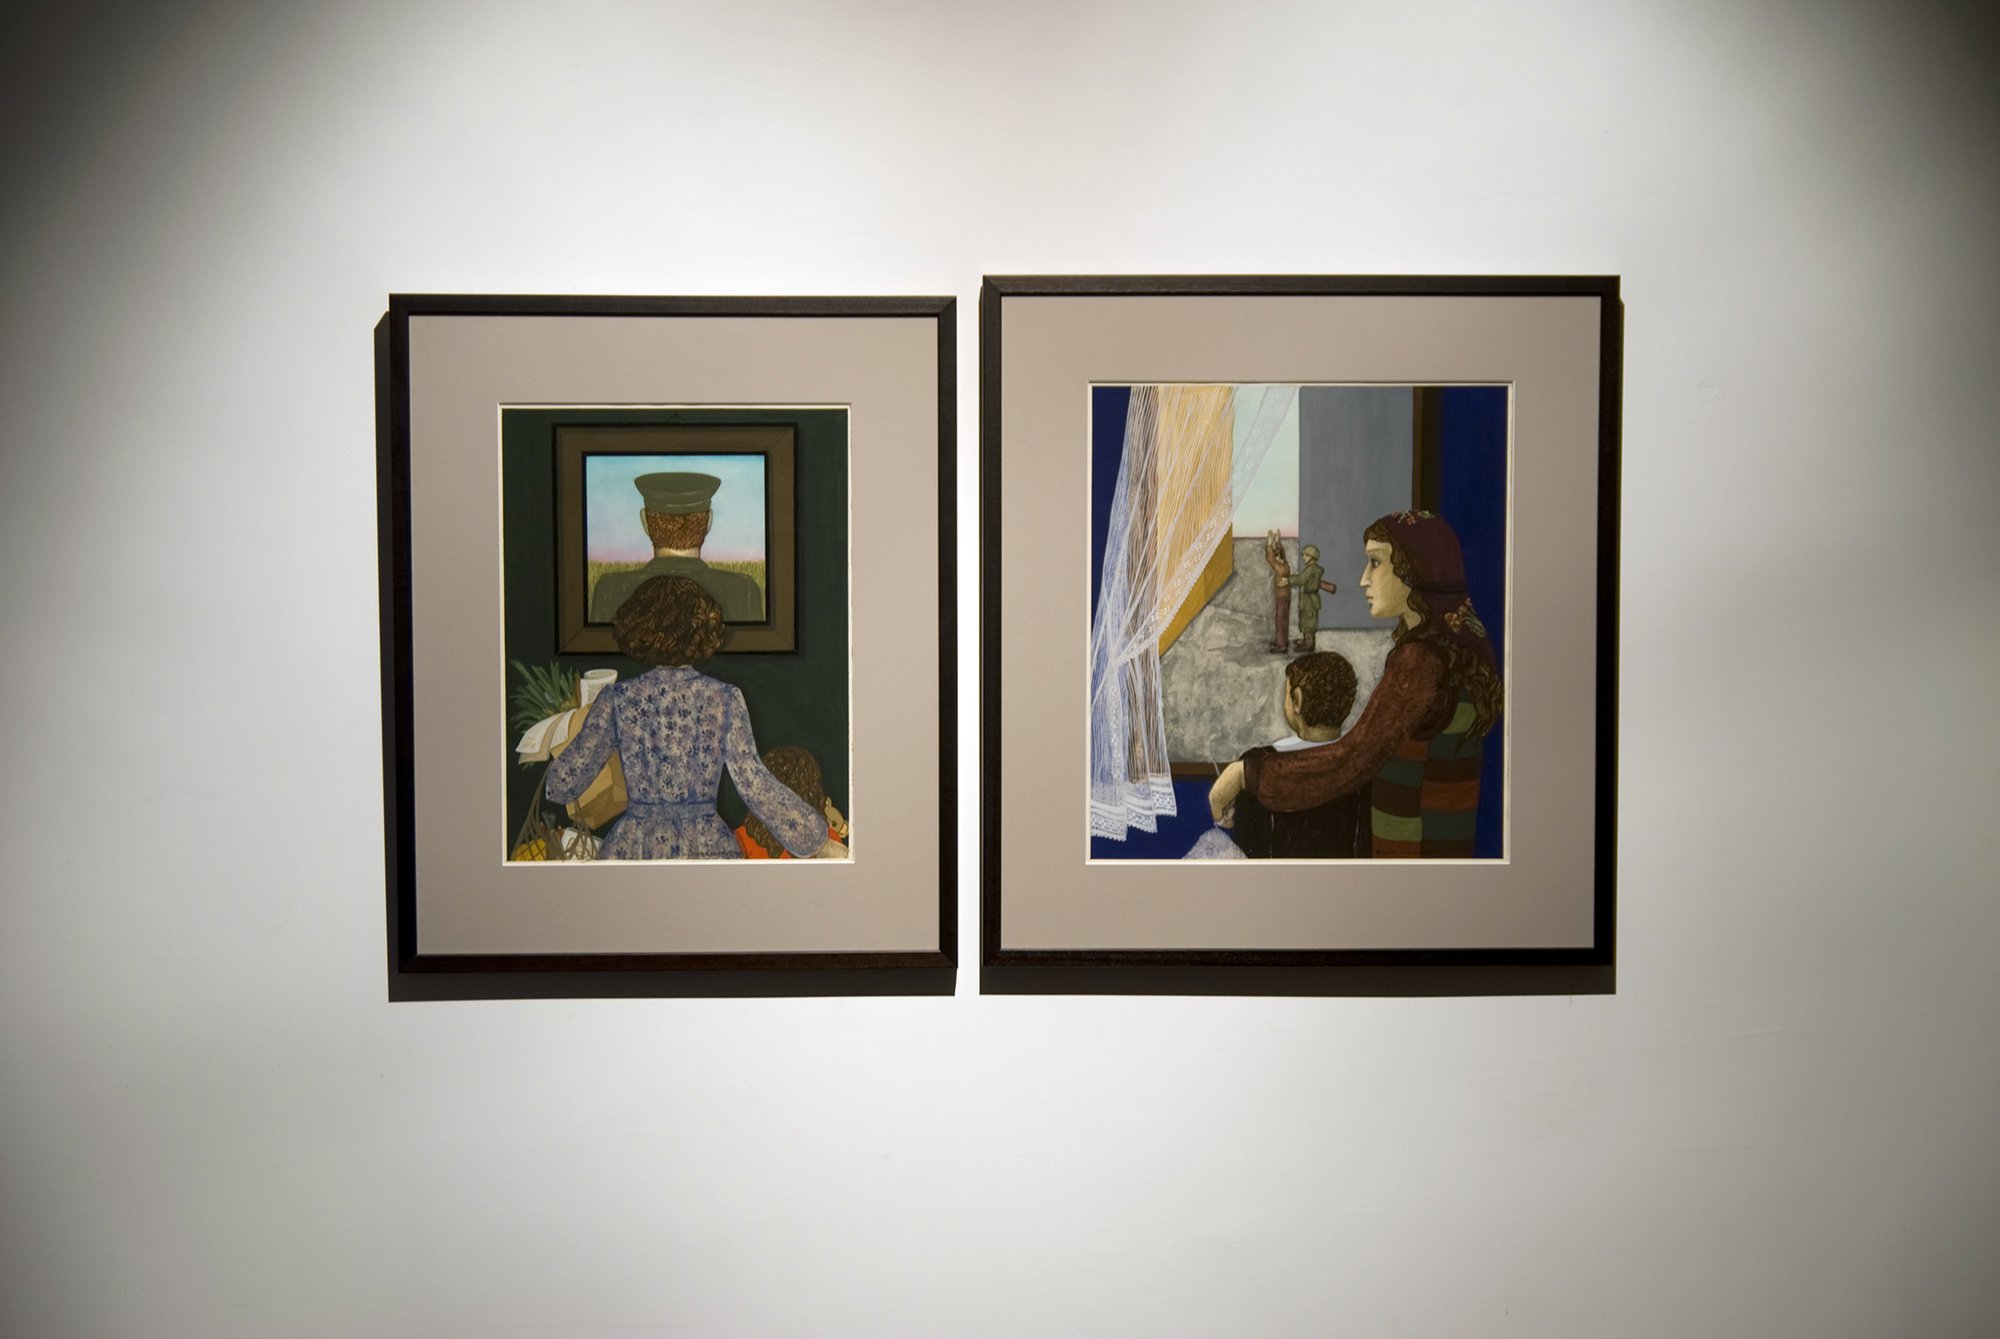 (Left) Gülsün Karamustafa, Picture, painting (frame), 70 x 59 cm (27 1/2 x 23 1/4 in), 1980.(Right) Gülsün Karamustafa, Window, painting (frame), 72.5 x 67 cm (28 1/2 x 26 3/8 in), 1980.